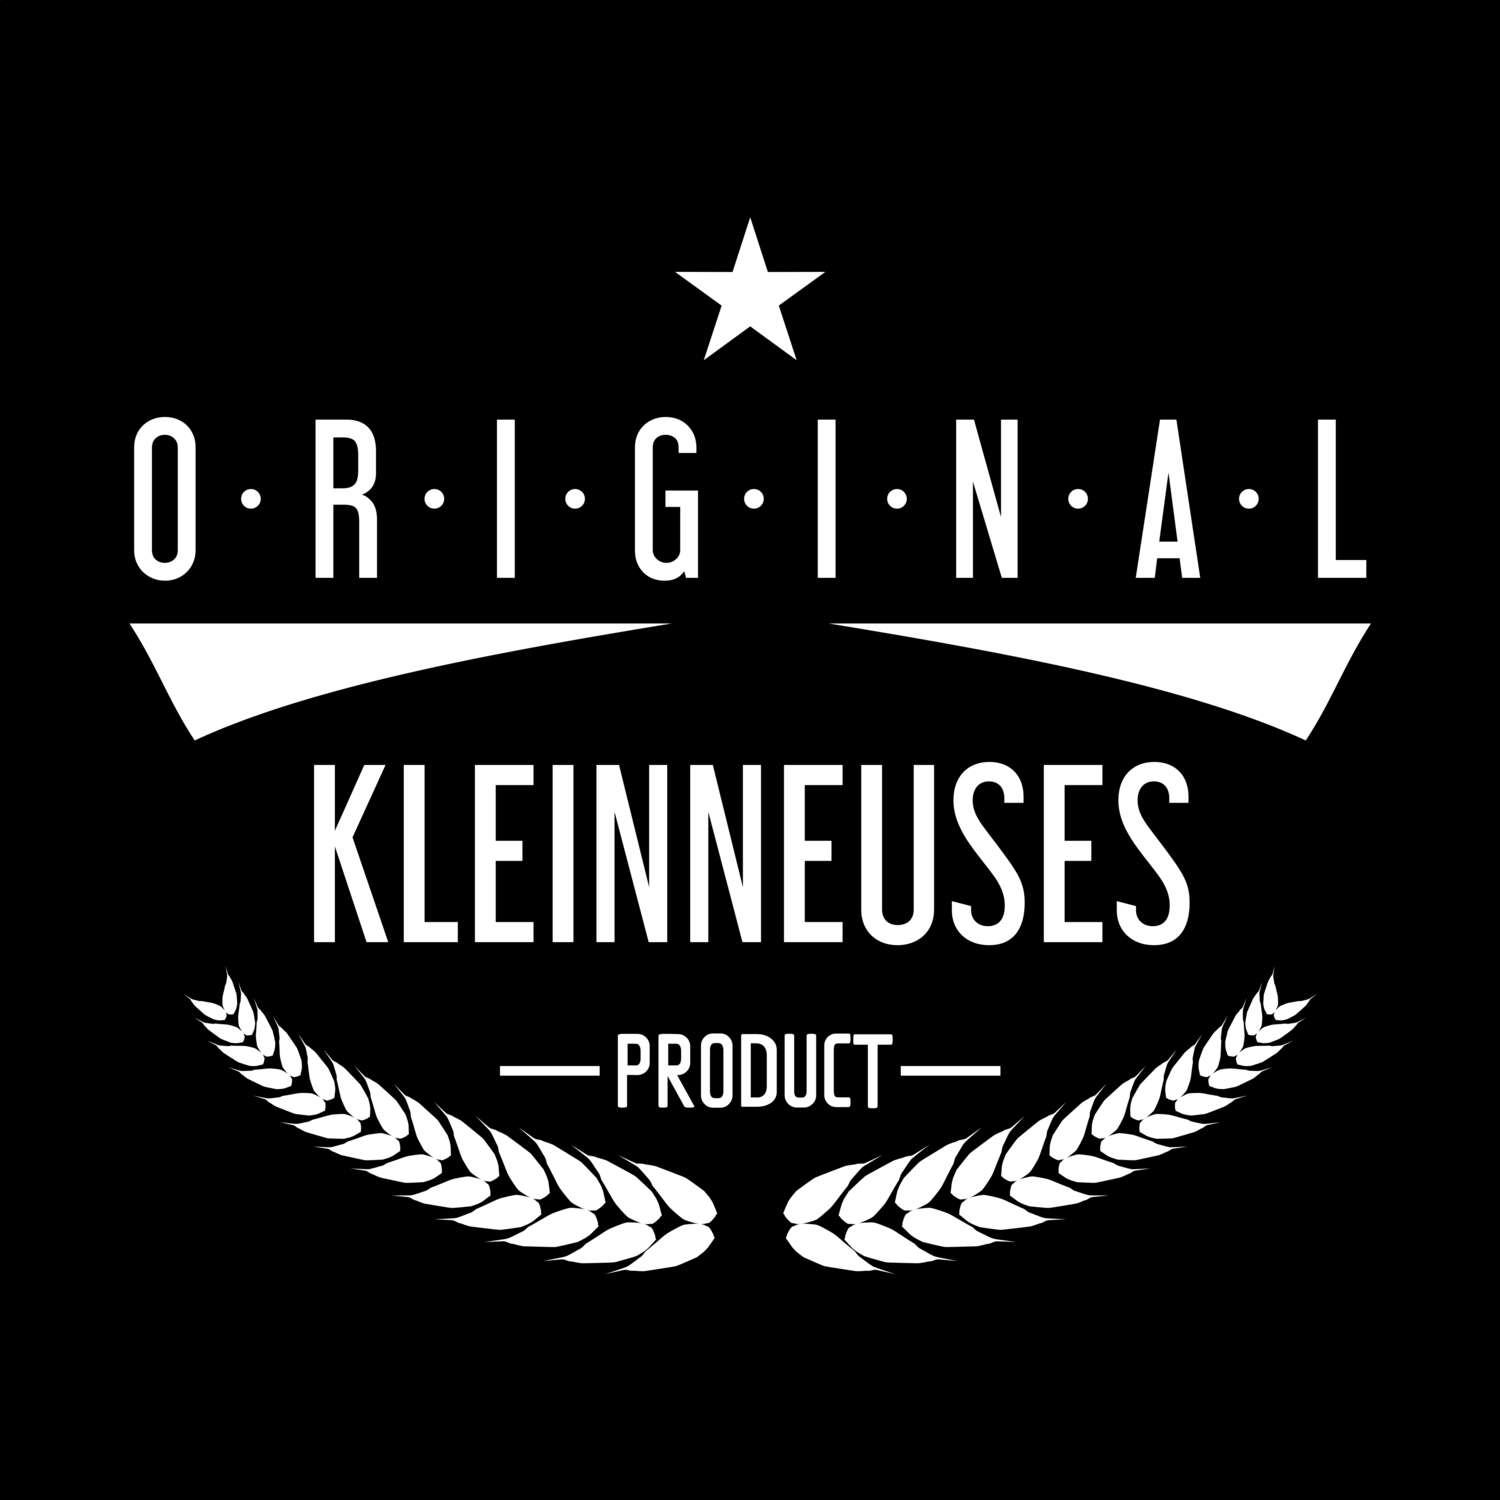 Kleinneuses T-Shirt »Original Product«